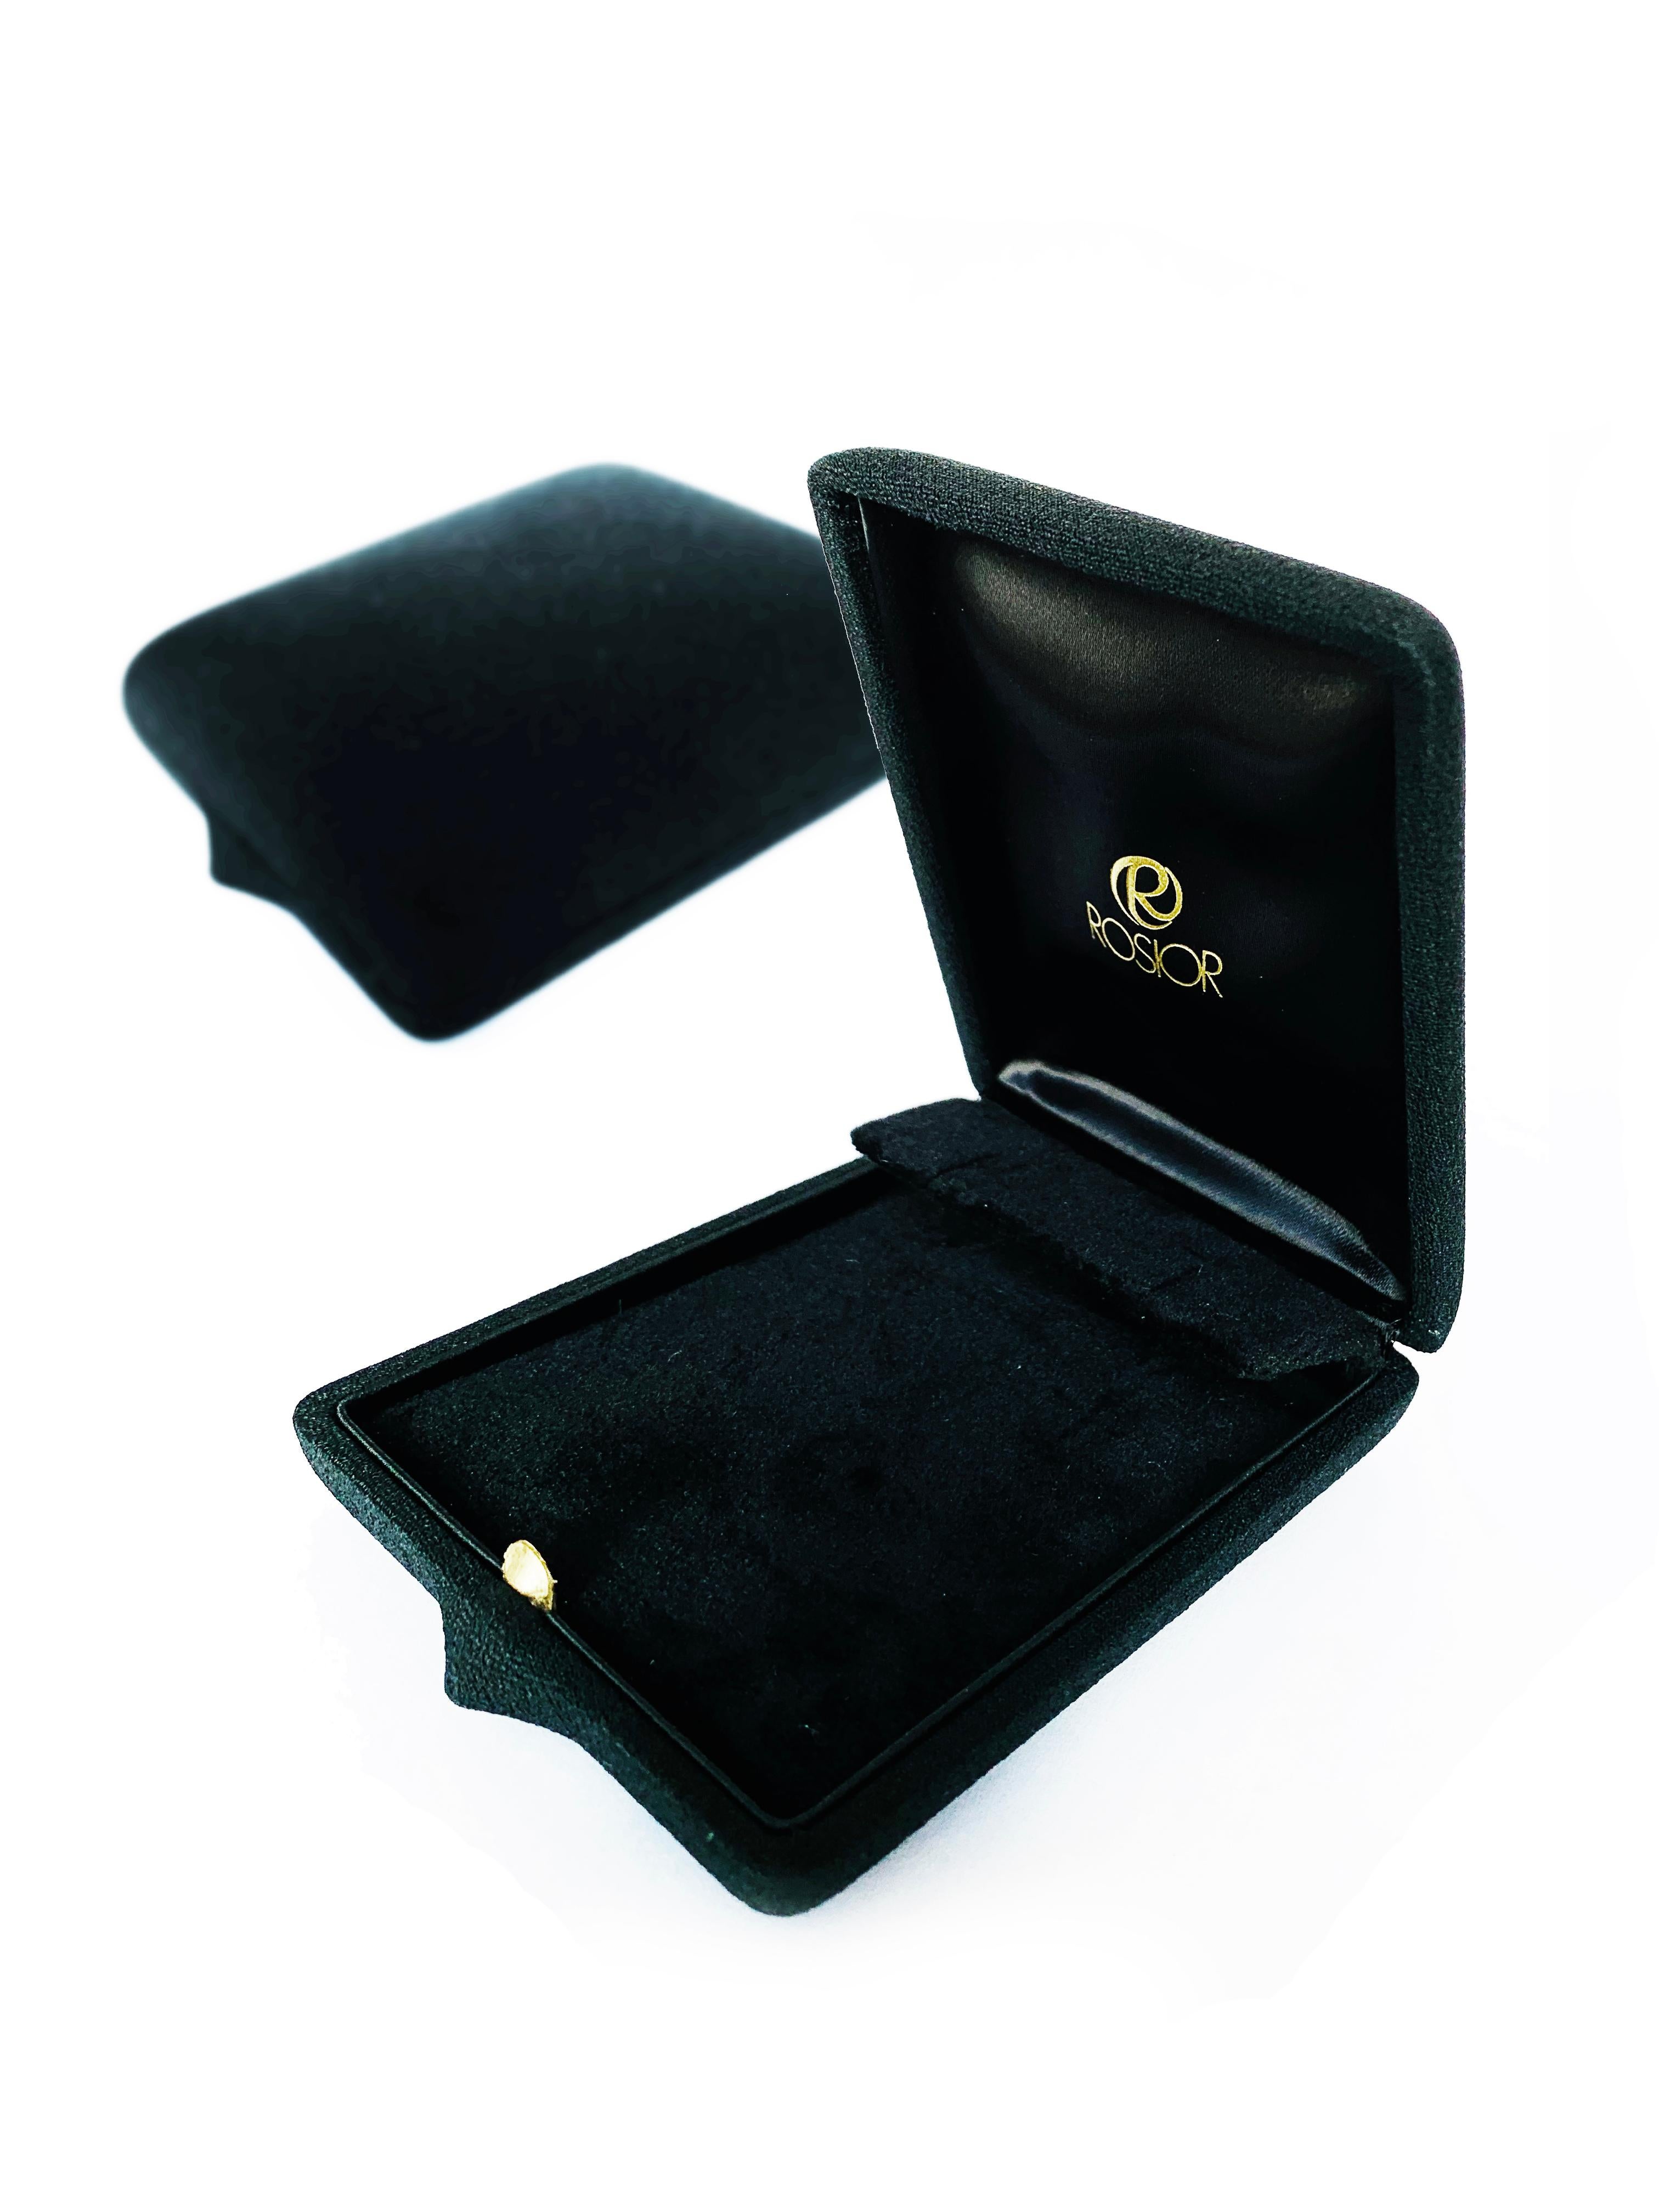 Diamond Drop Earrings set in White Gold For Sale 1